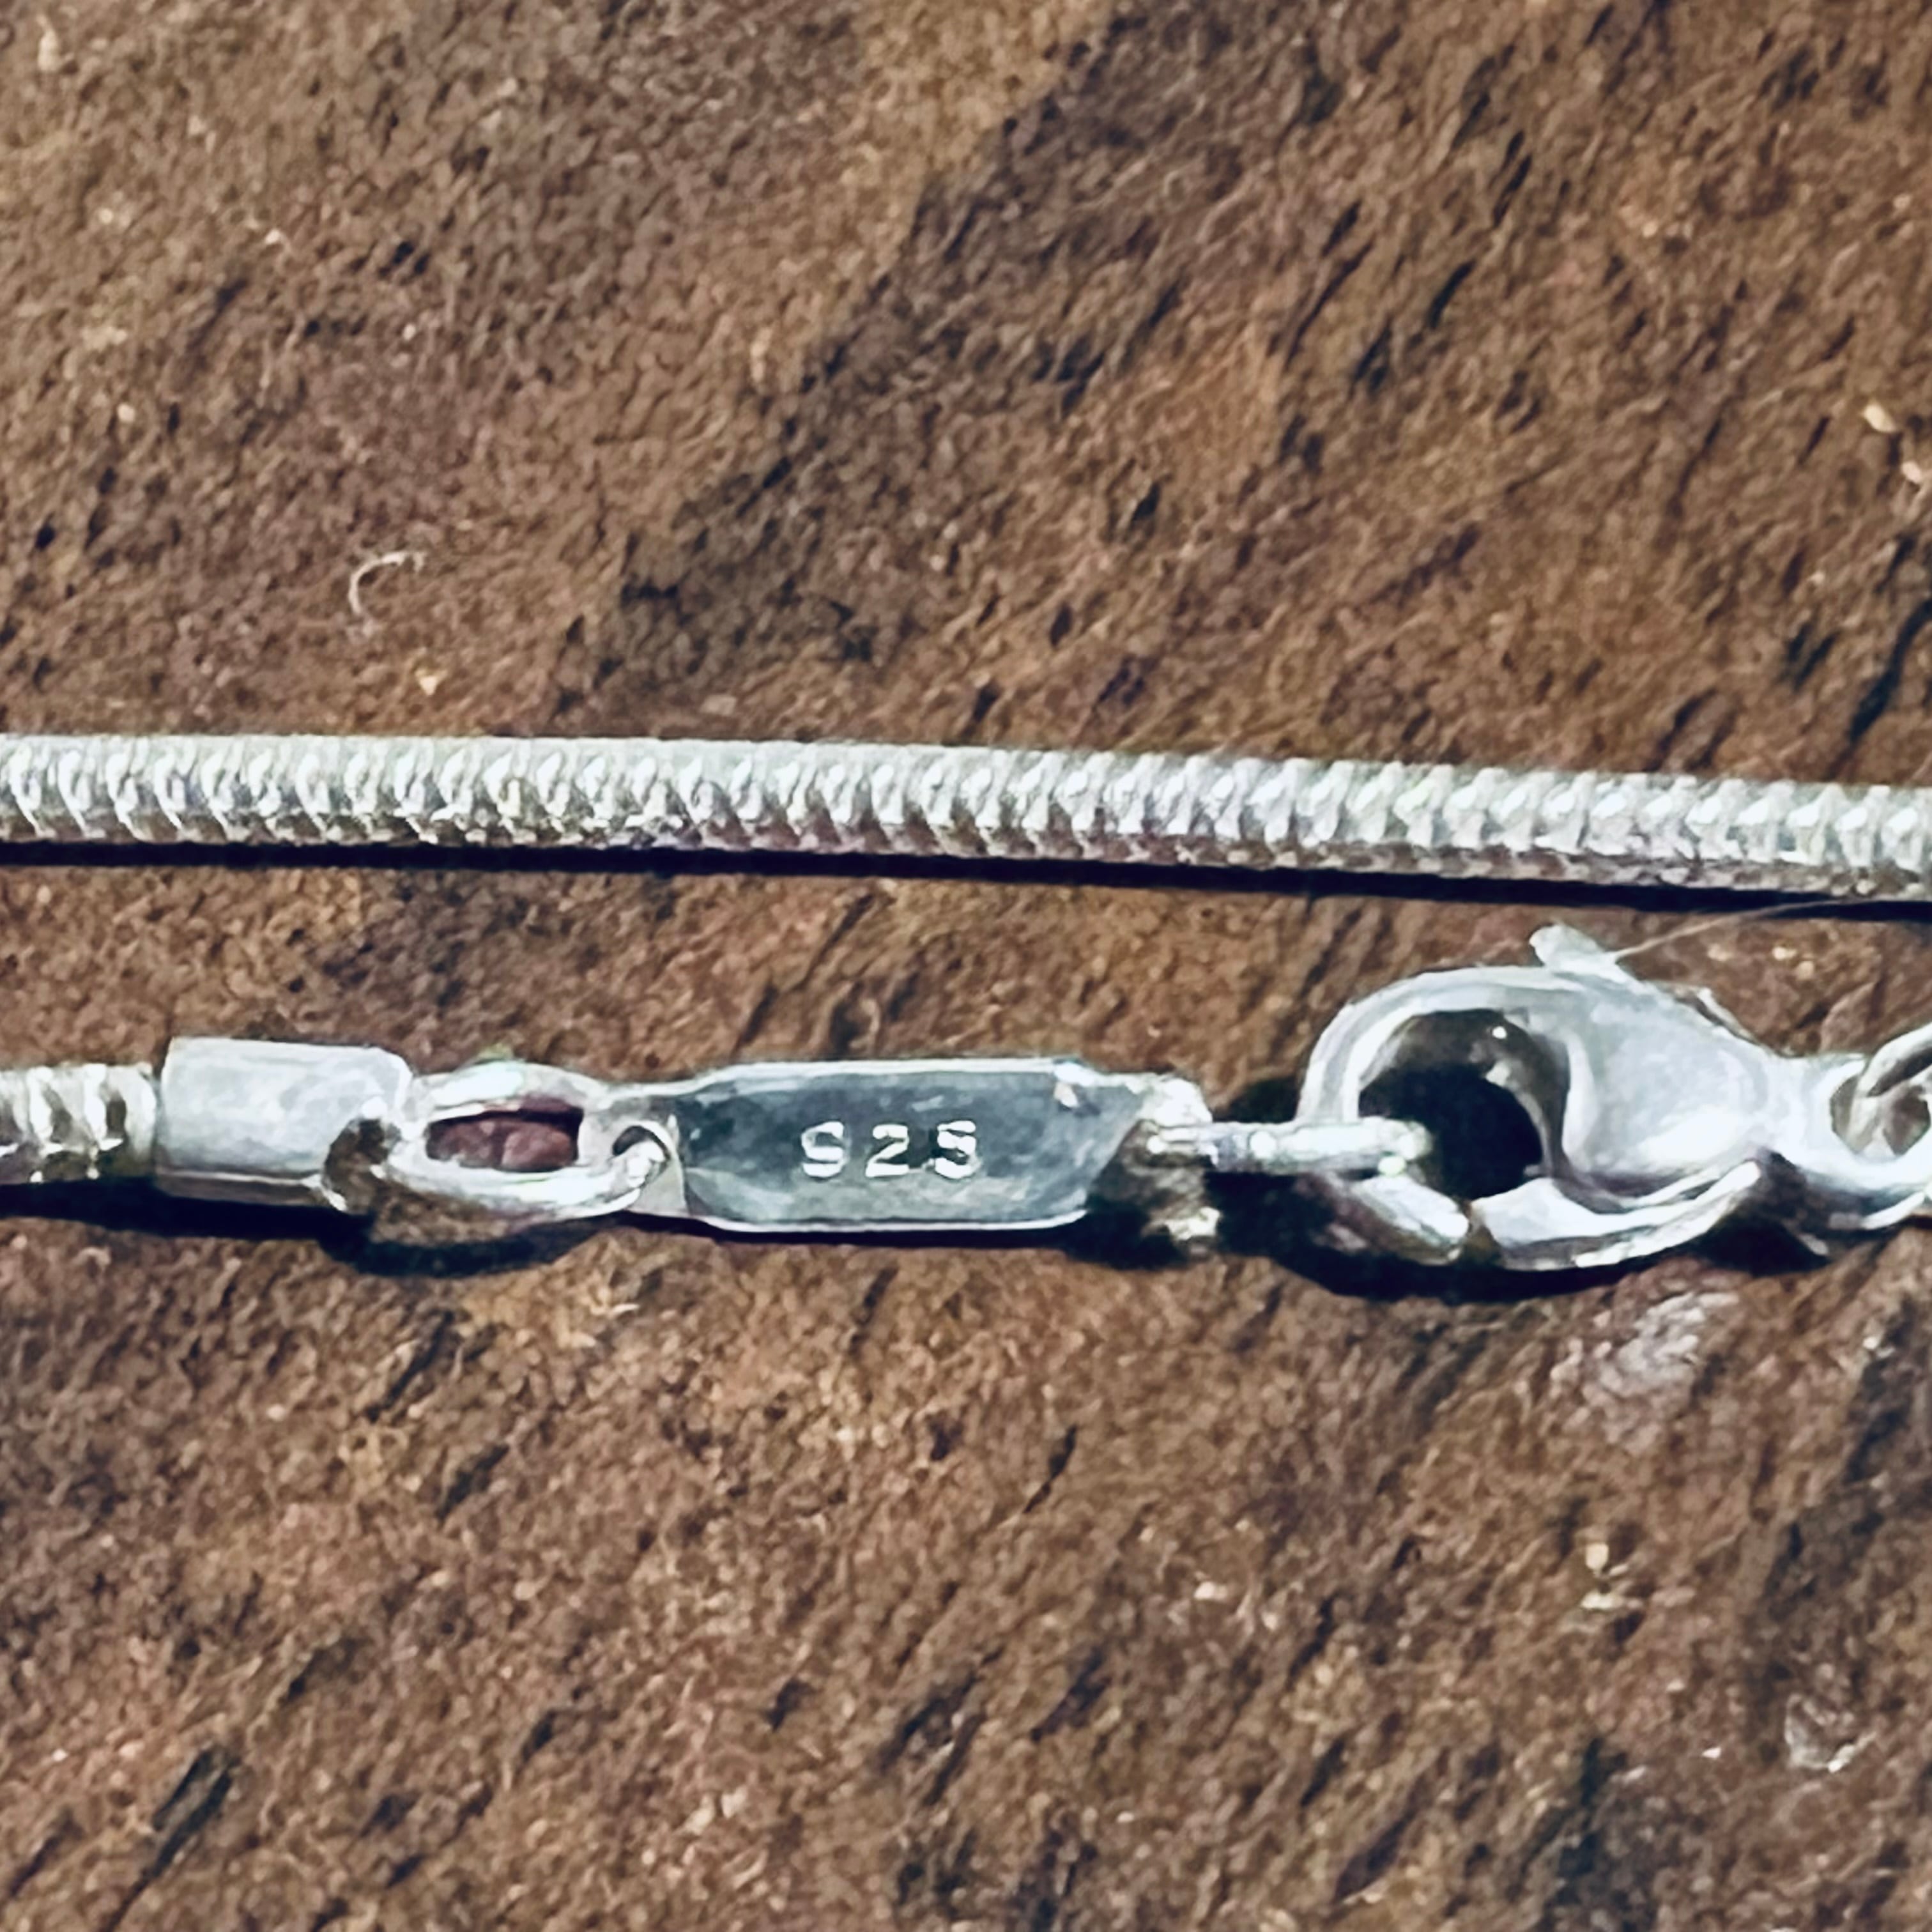 VINTAGE TIFFANY & CO. Locket Pendant Long Necklace Snake Chain